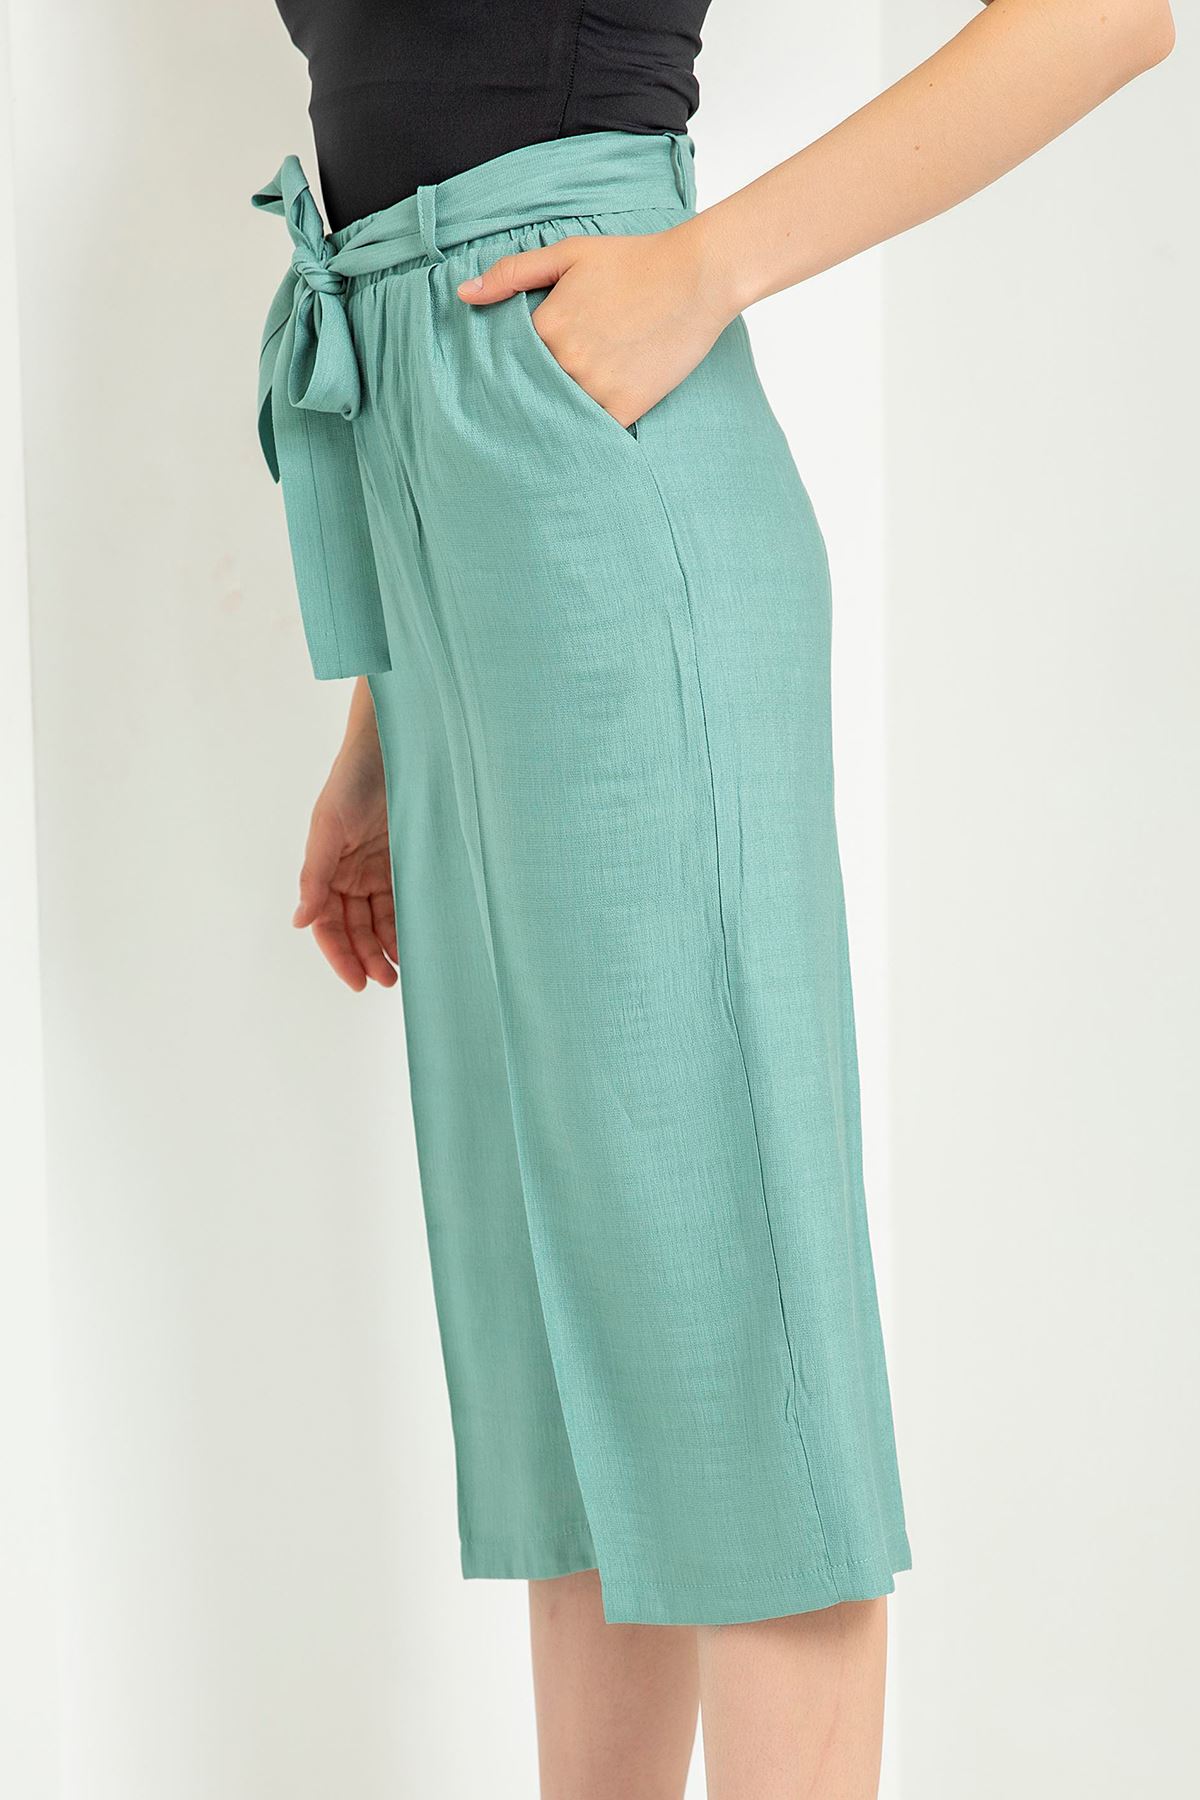 Linen Fabric 3/4 Short Comfy Fit Belted Women'S Trouser - Mint